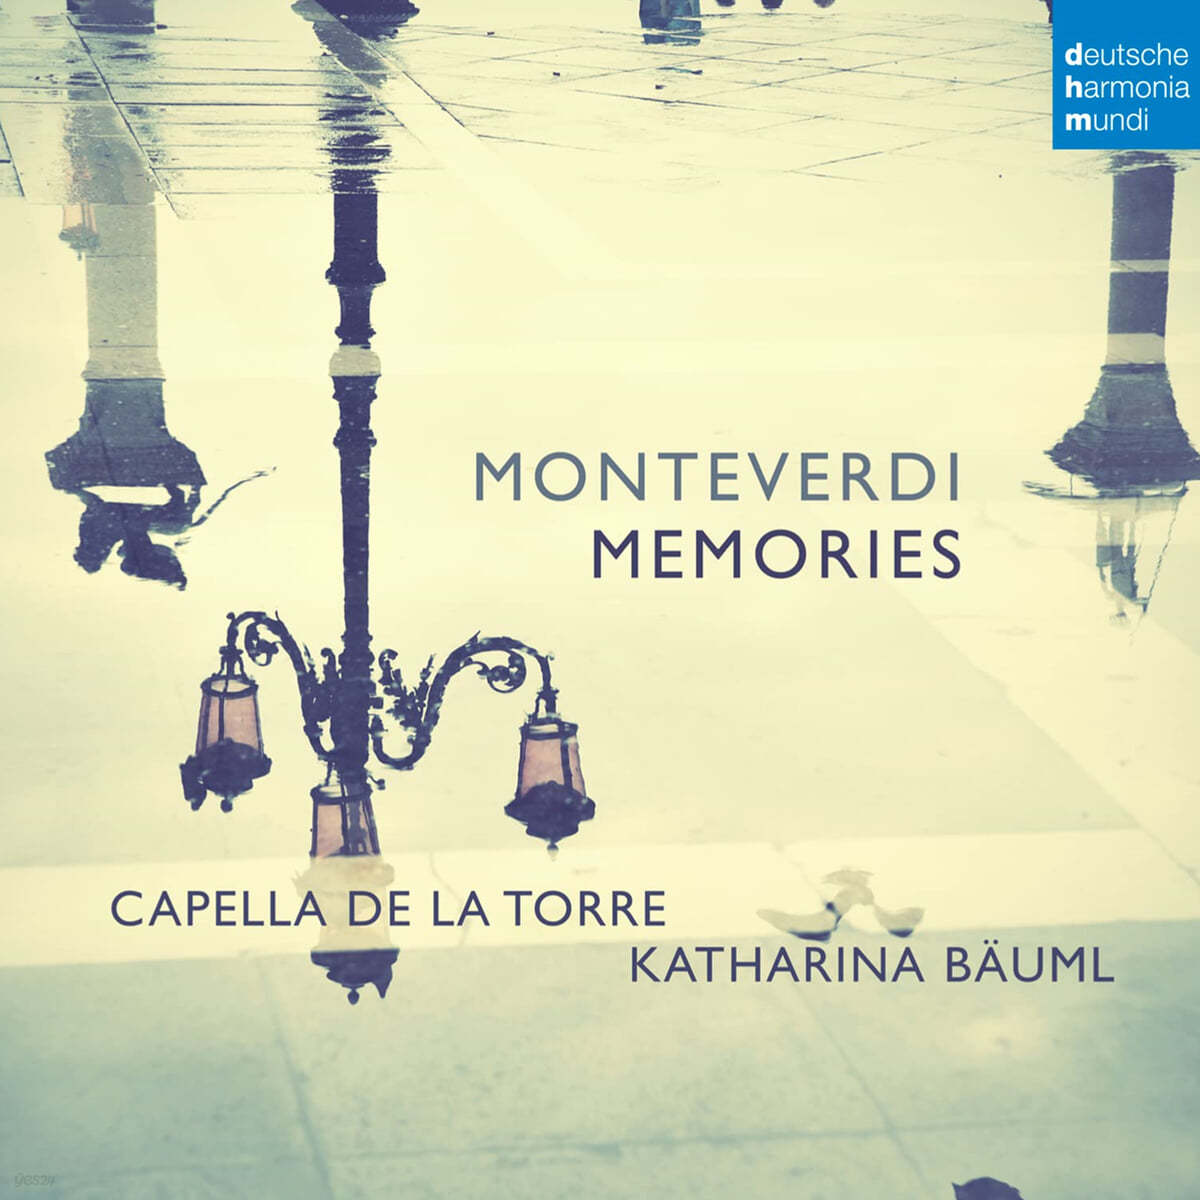 Capella De La Torre 몬테베르디: 베니스 협회 작품 모음집 (Monteverdi: Memories)